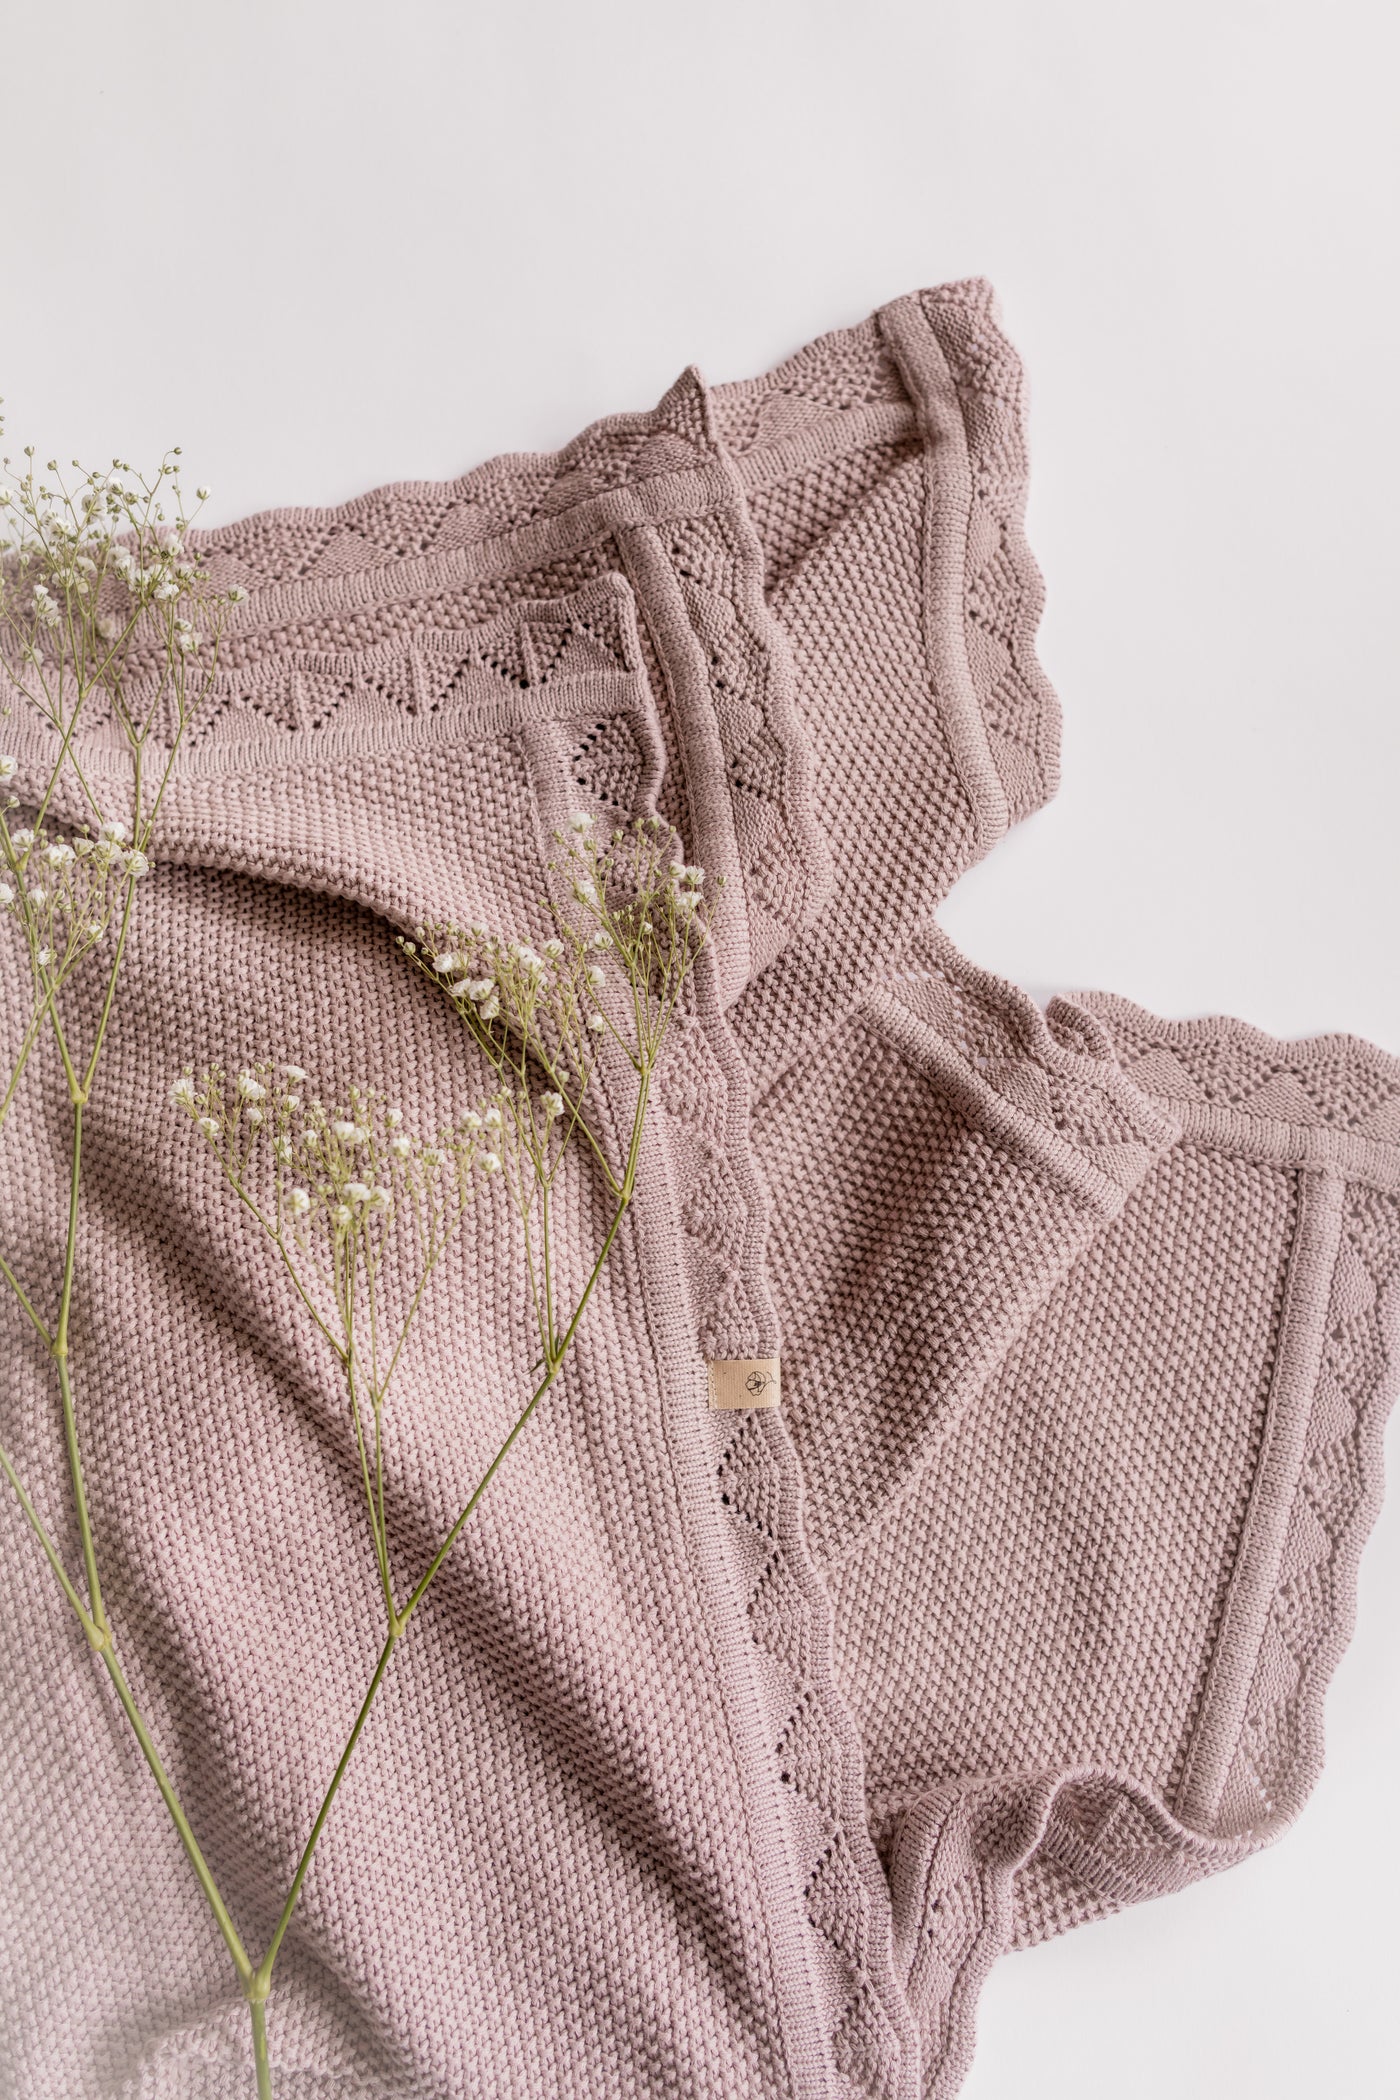 Wildflower Baby Knit Blanket